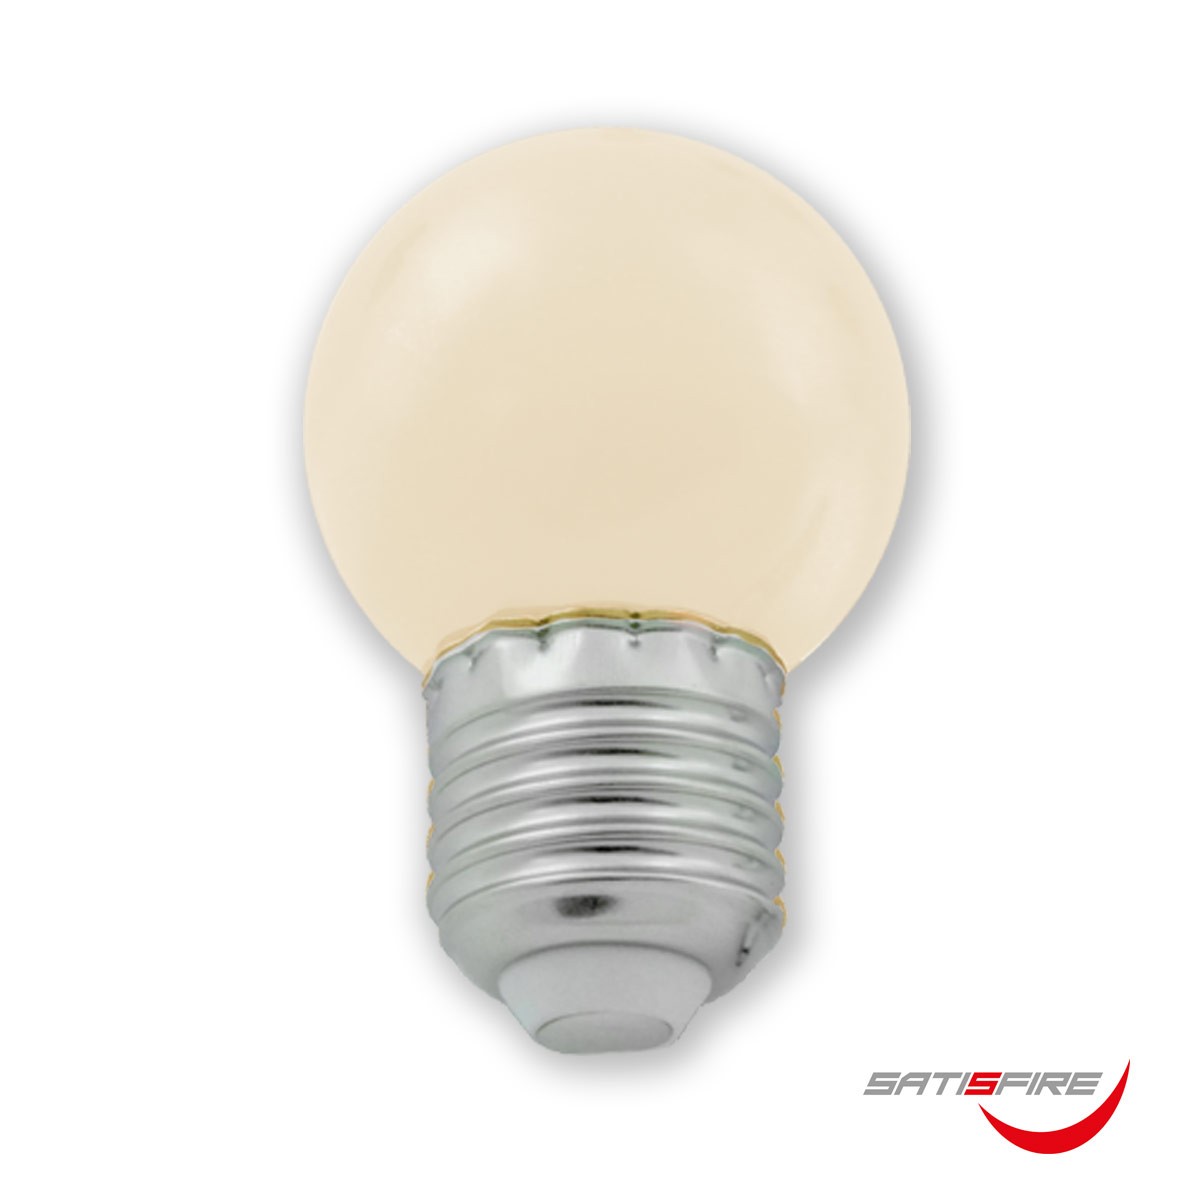 LED Leuchtmittel G45 – warmweiß 2700K – E27 – 1W | SATISFIRE